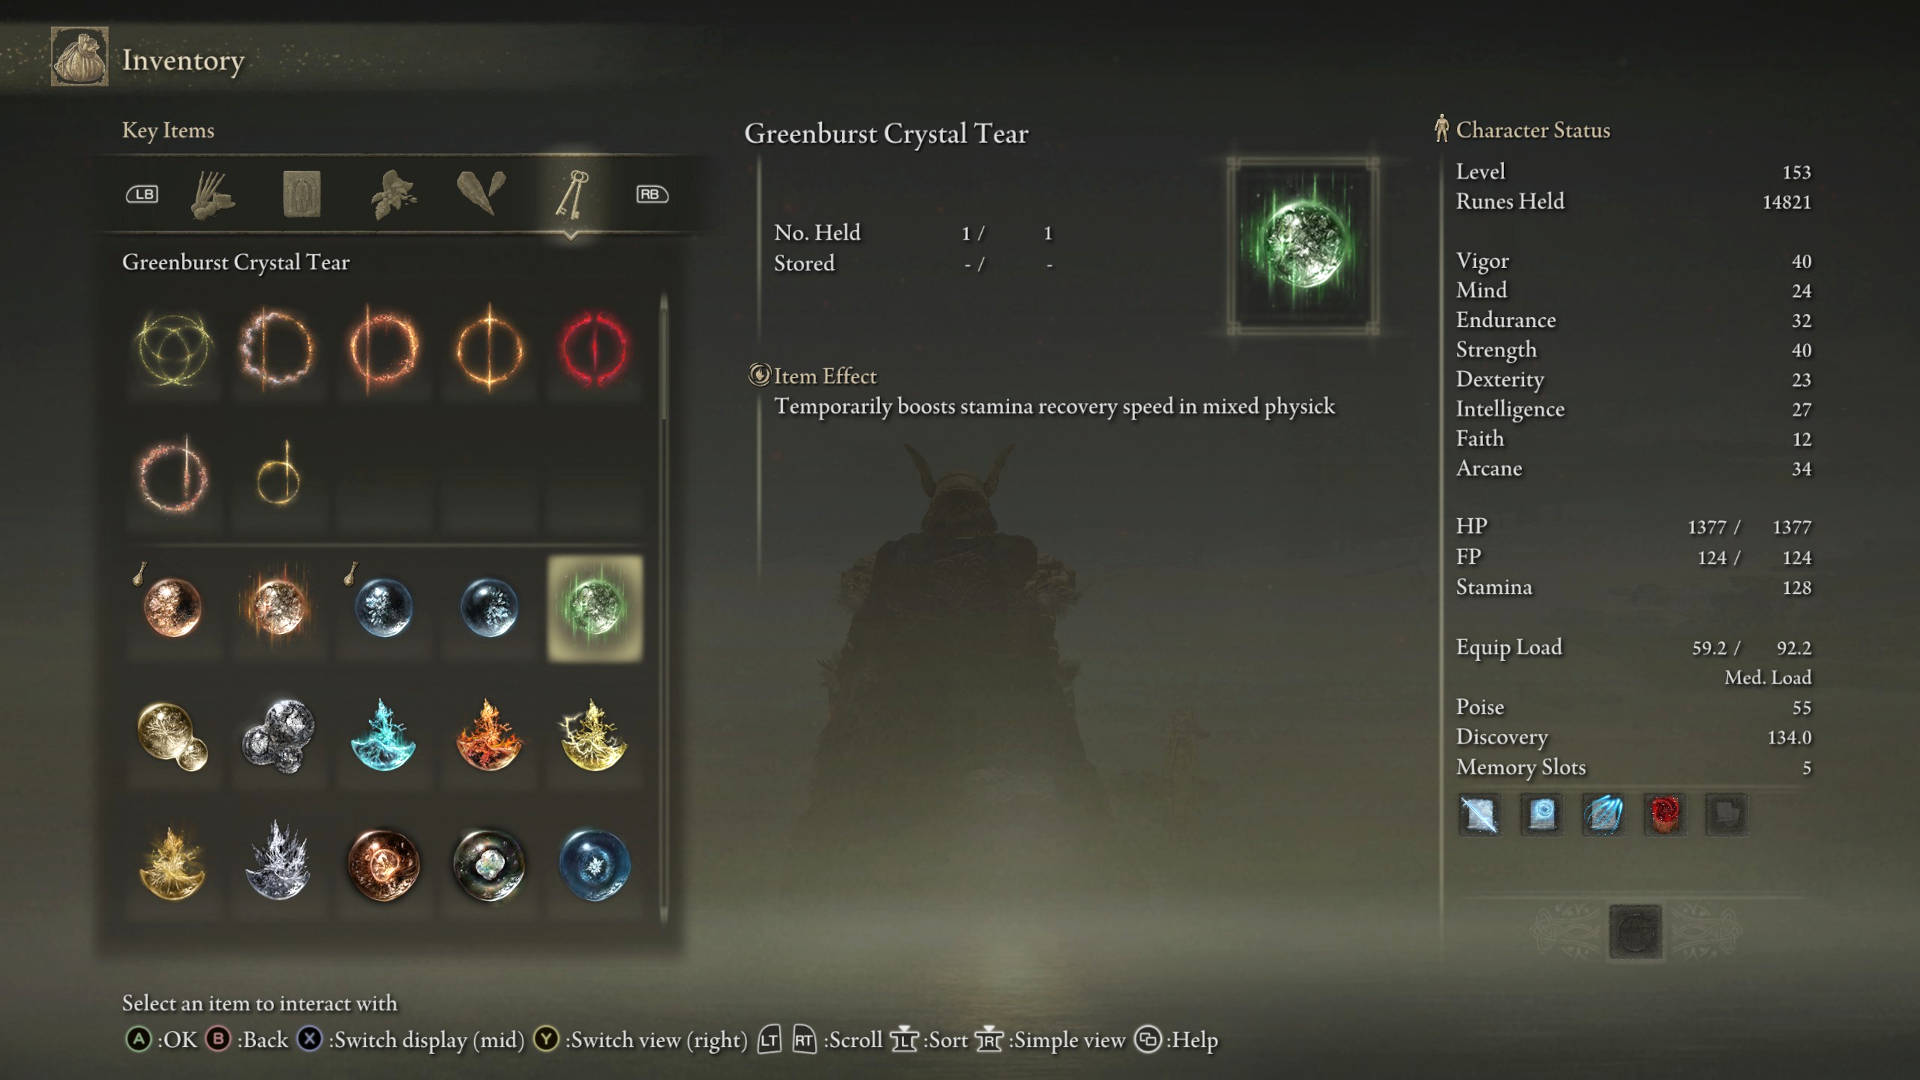 Elden Ring crystal tears: the Greenburst Crystal tear in the inventory menu.